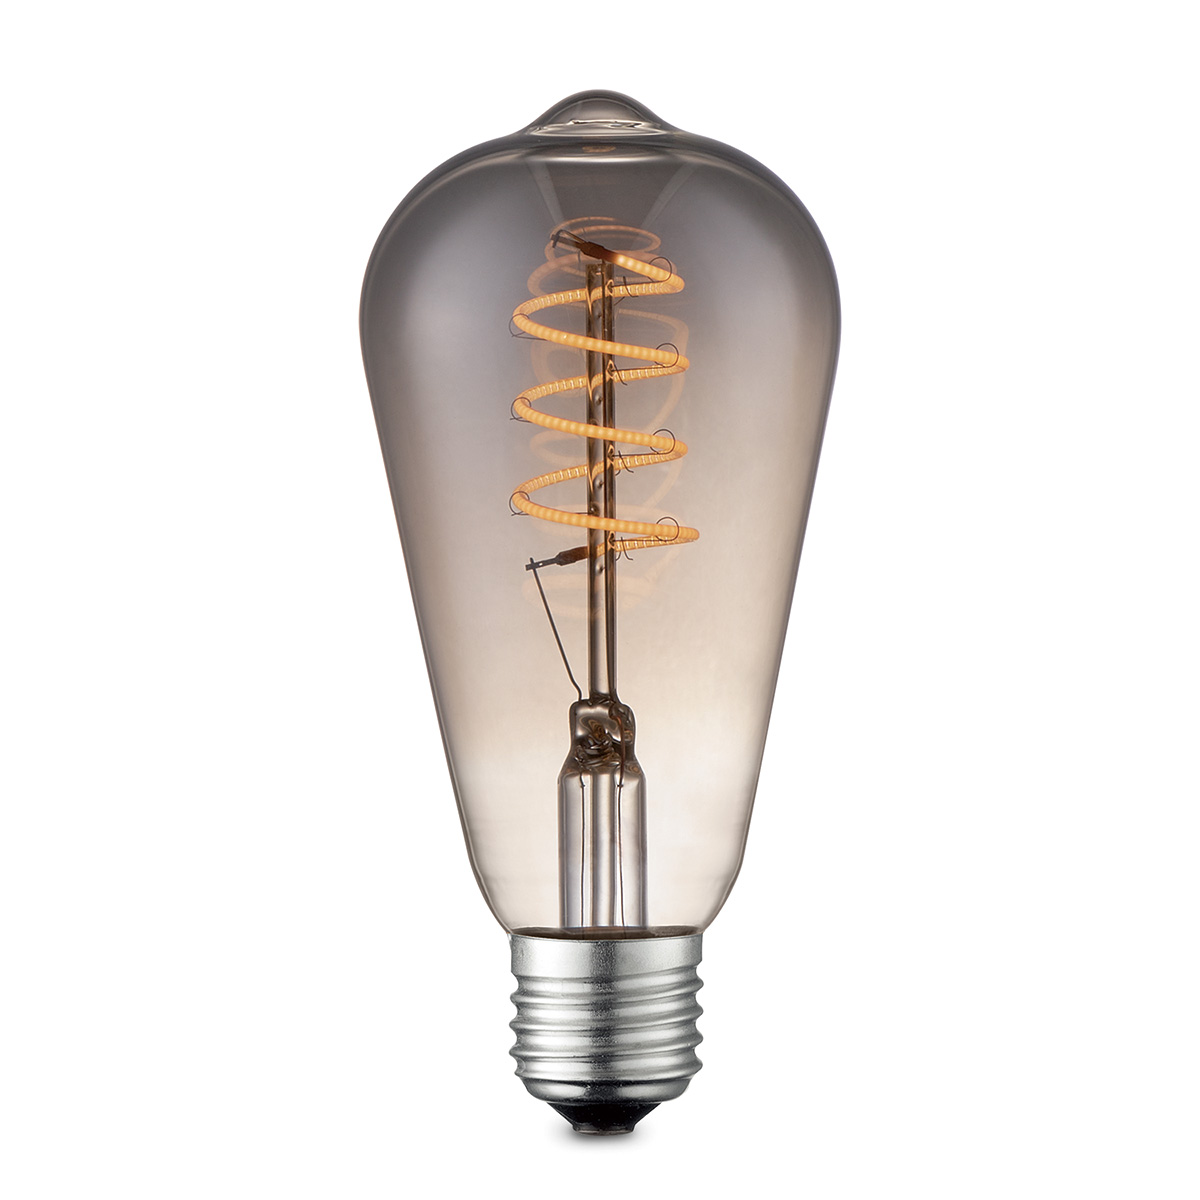 Koop Light depot LED lamp Drop Spiral 4W dimbaar – smoke - Outlet met de hoogste korting bij Light depot Outlet!